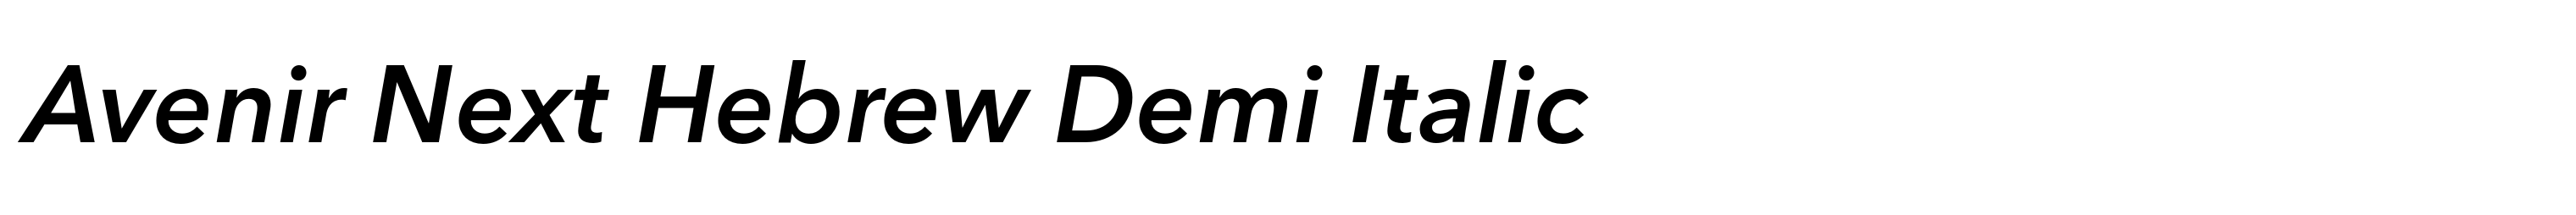 Avenir Next Hebrew Demi Italic